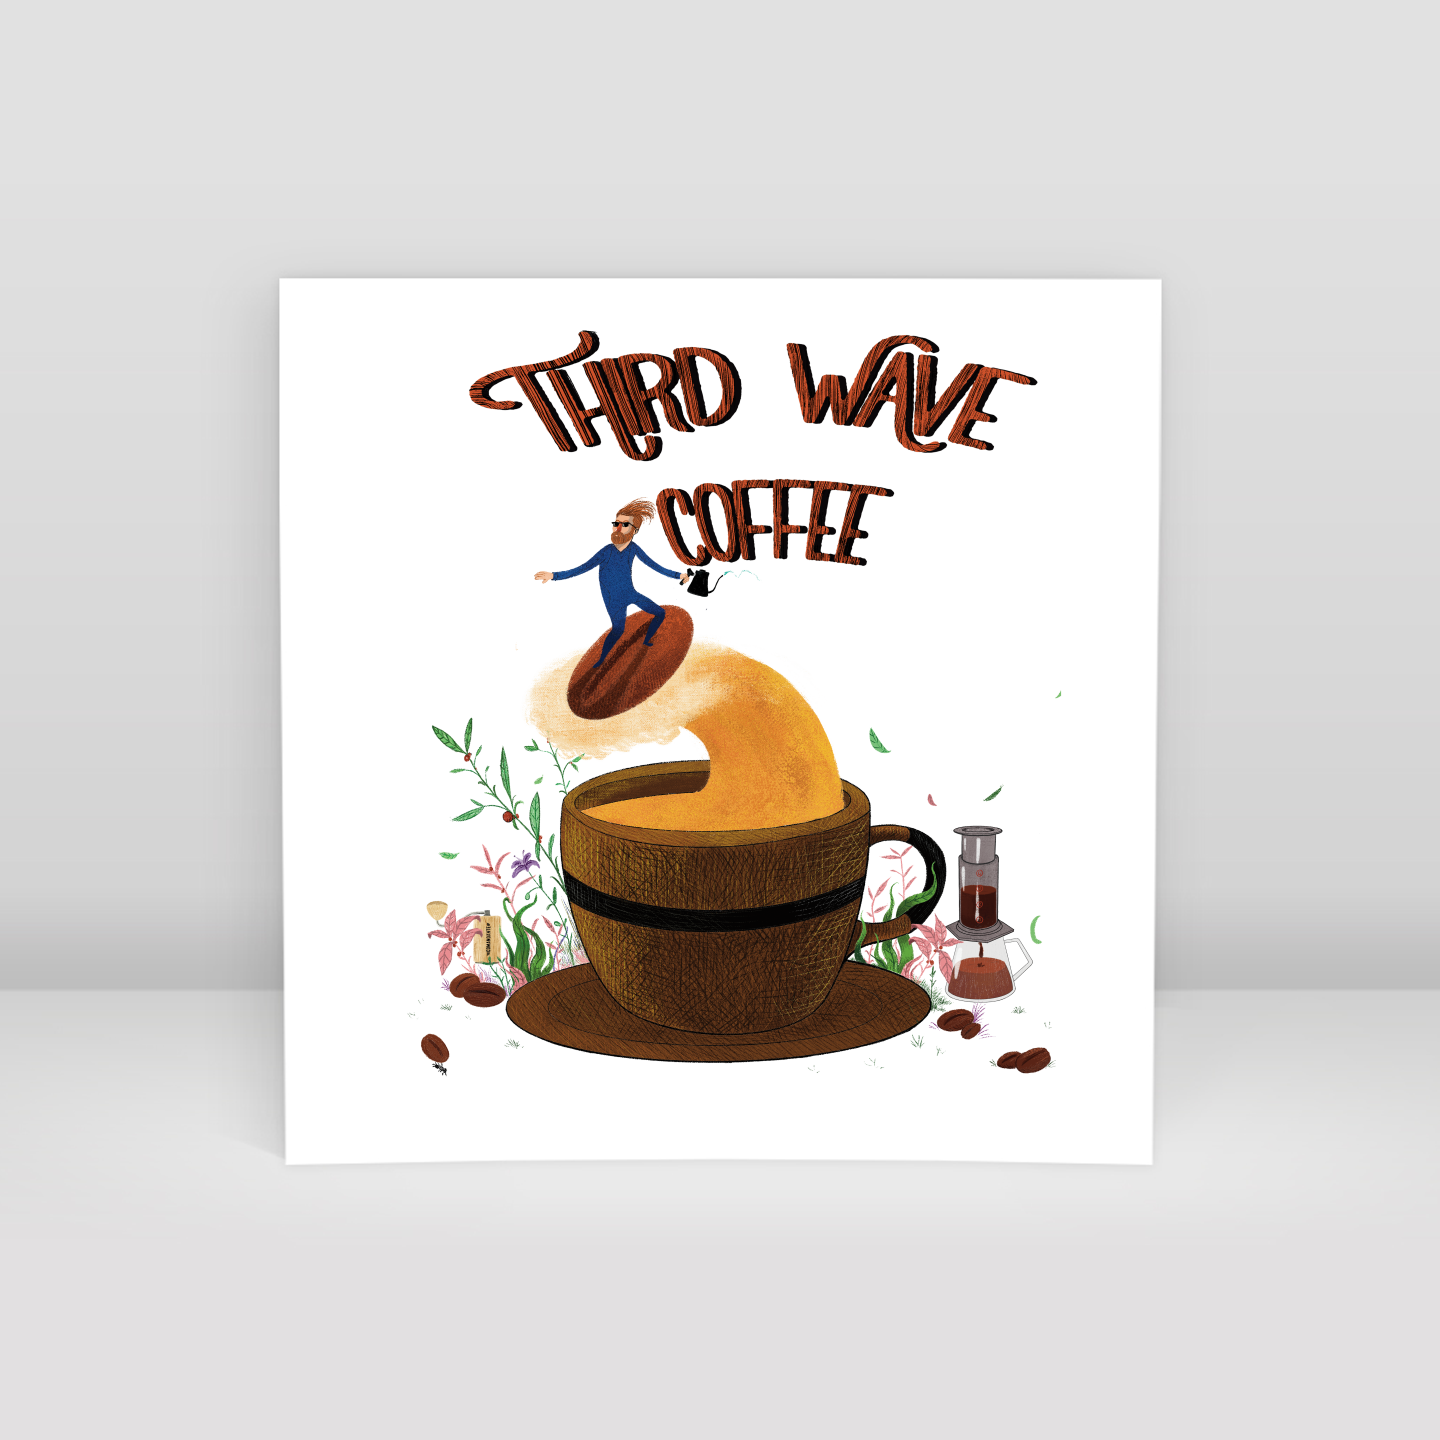 Third Wave Coffee - Art Print